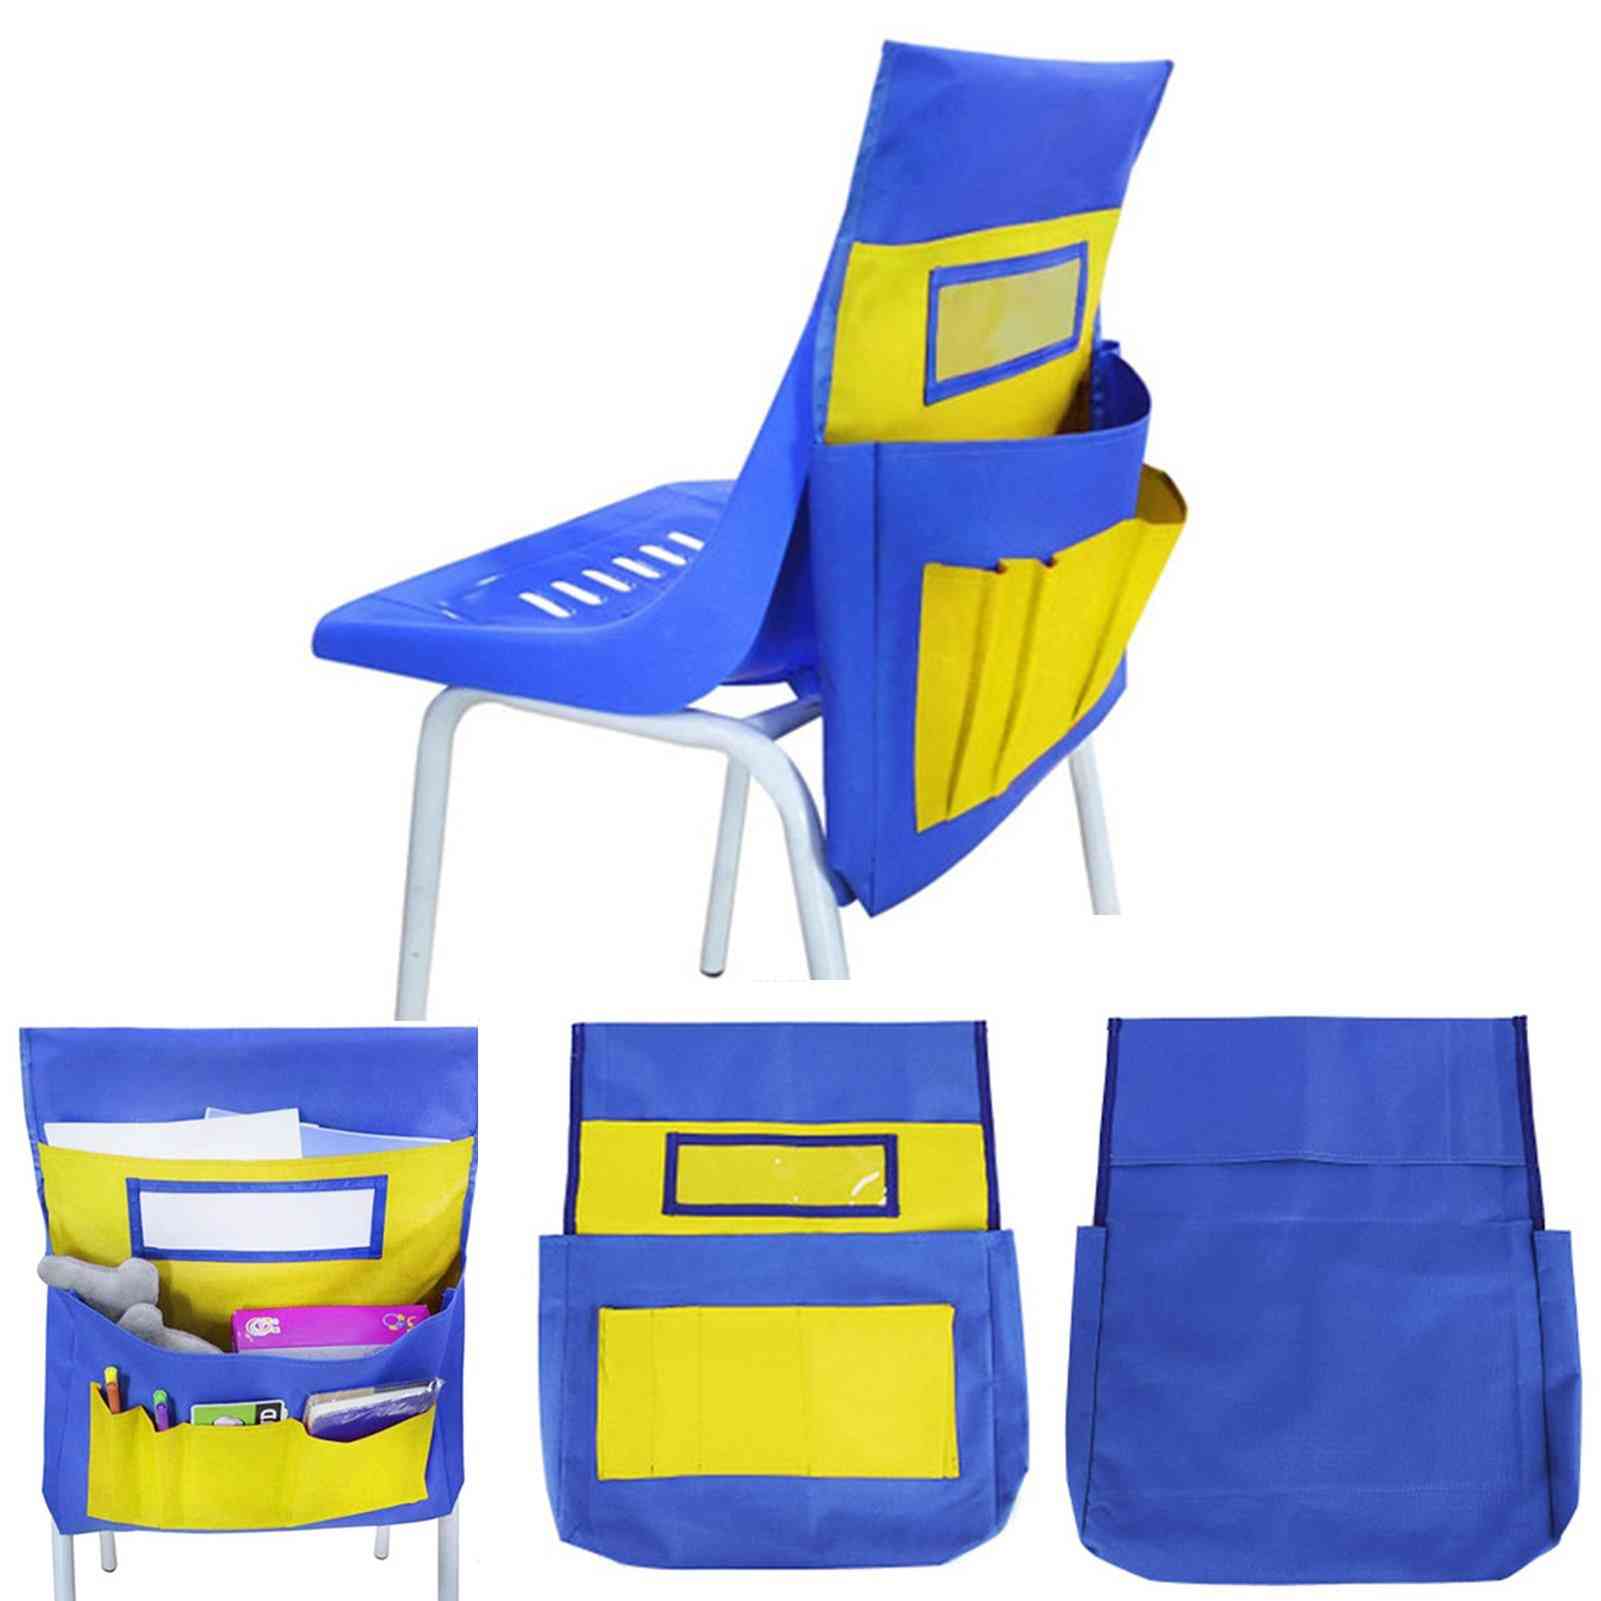 School Stationery- Organizer Pocket Collection, Chair Back Storage Bag